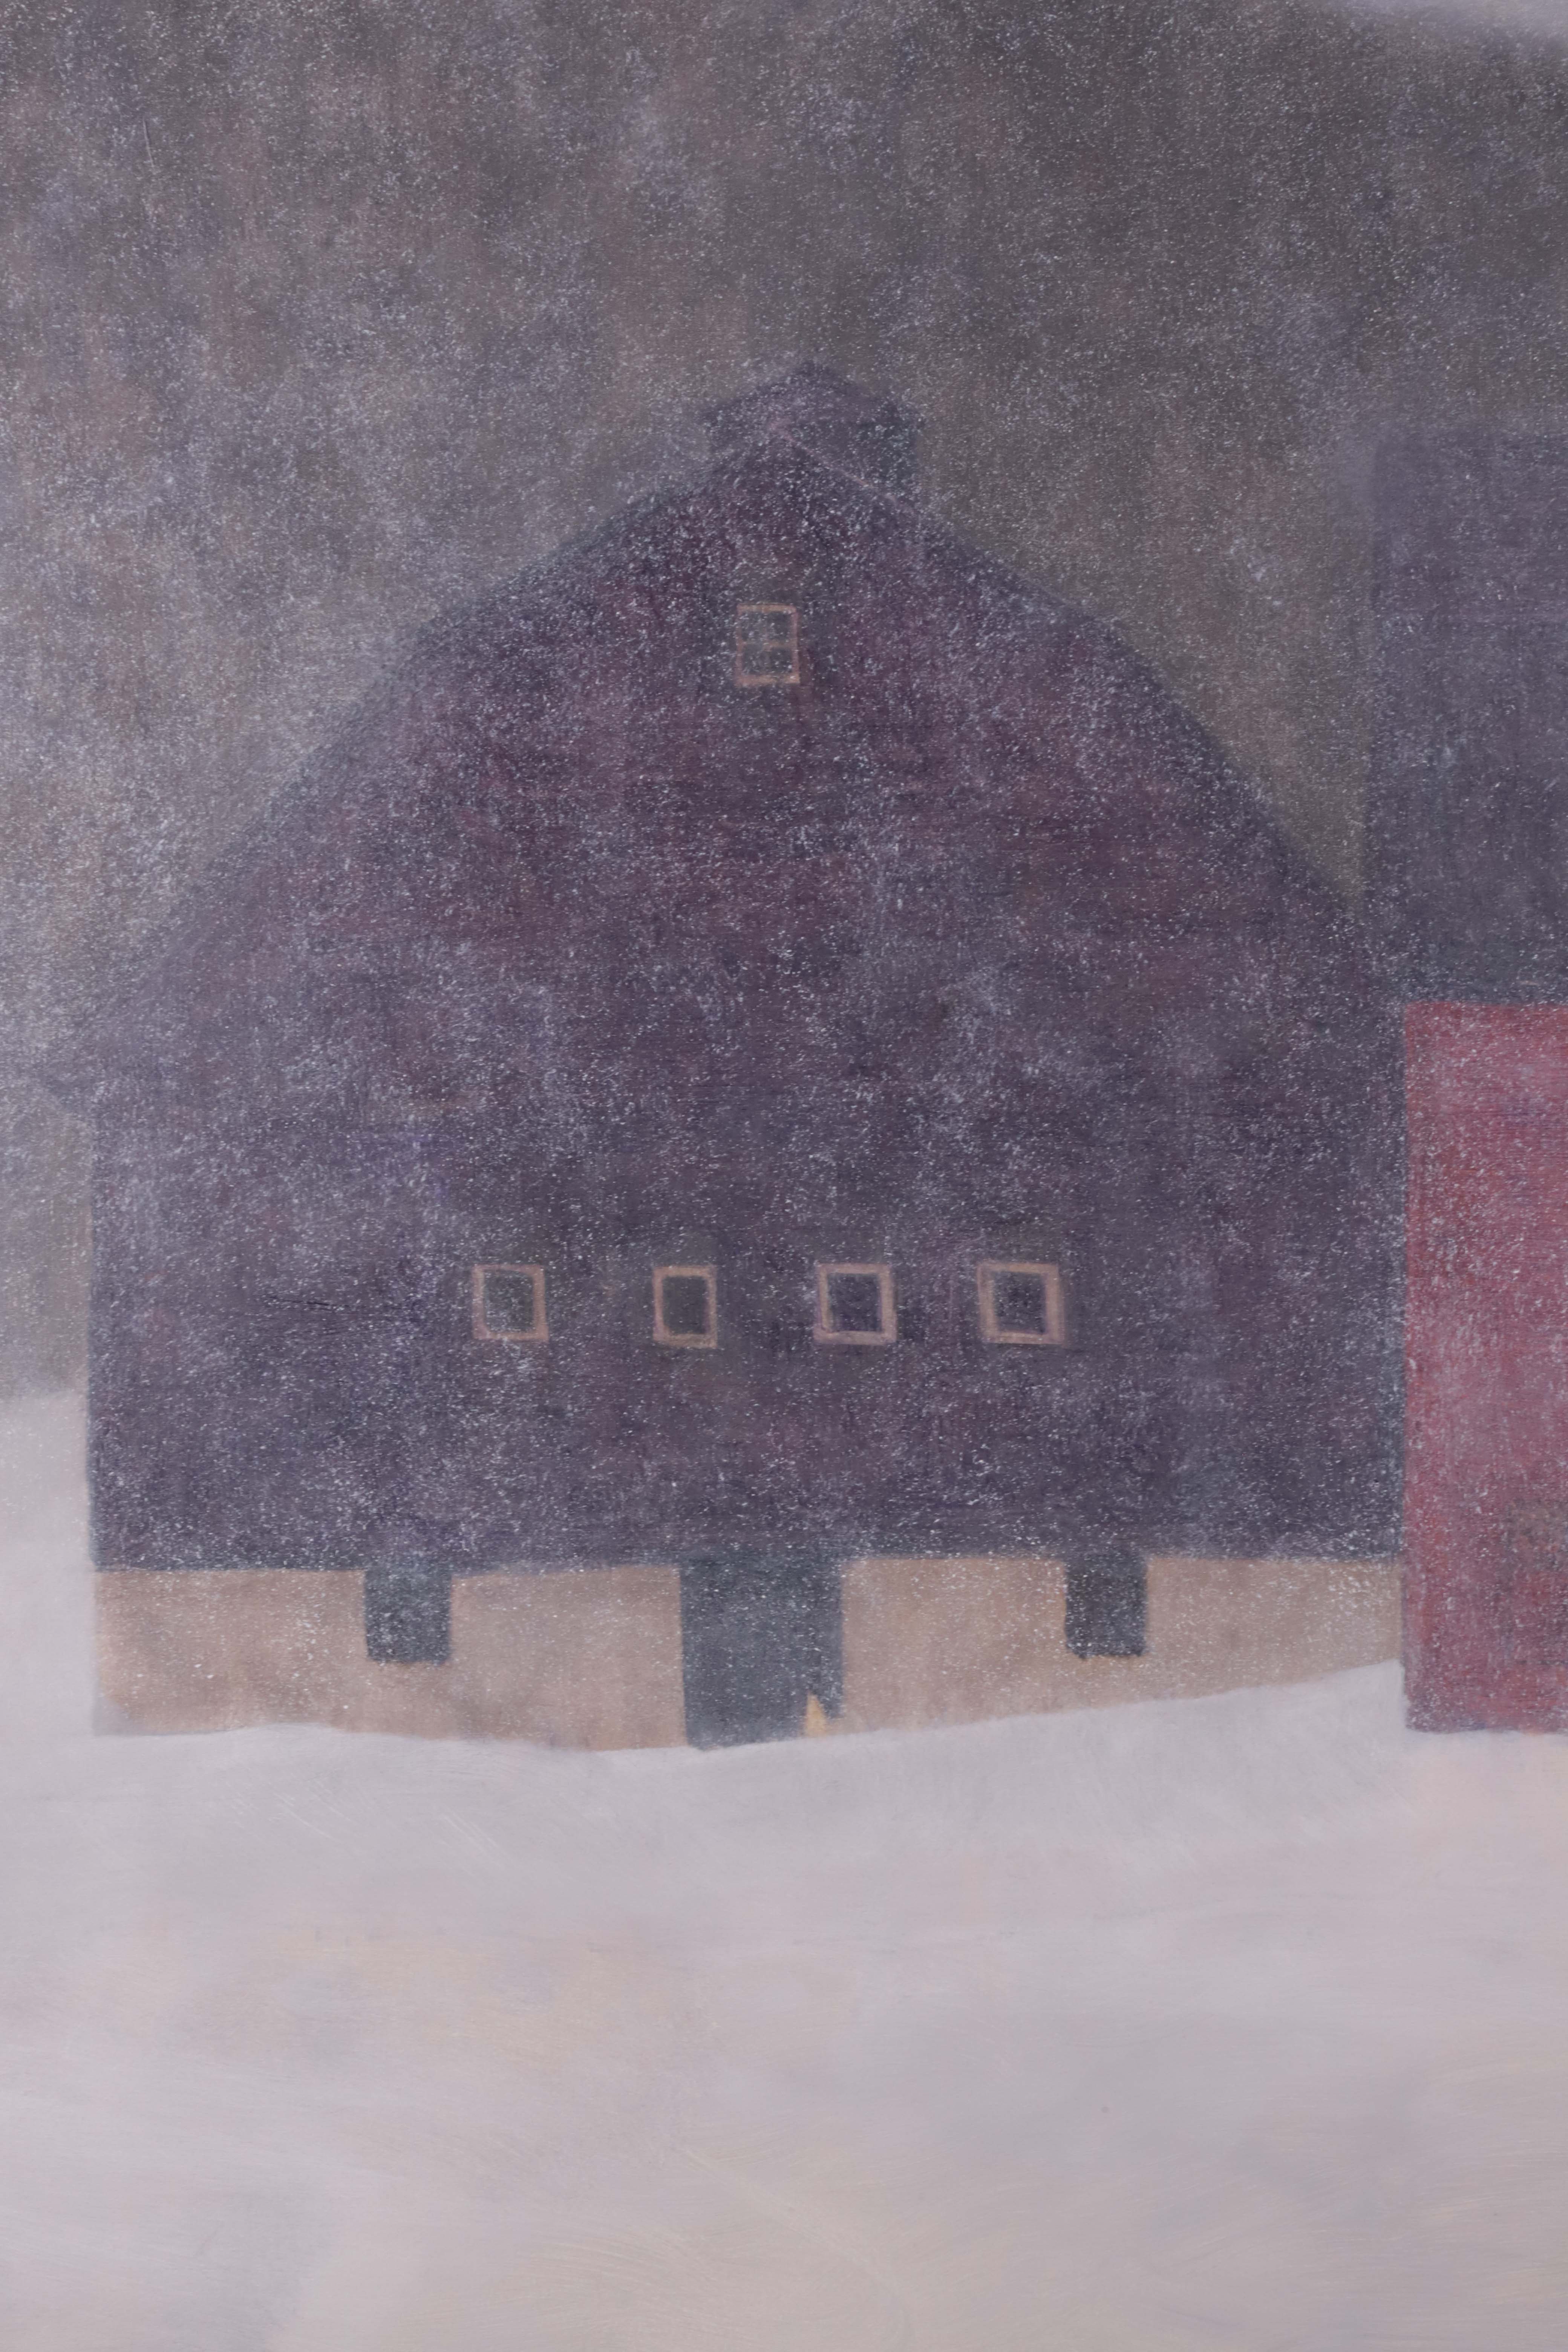 Donald Jurney Oil on Canvas “The Barn”